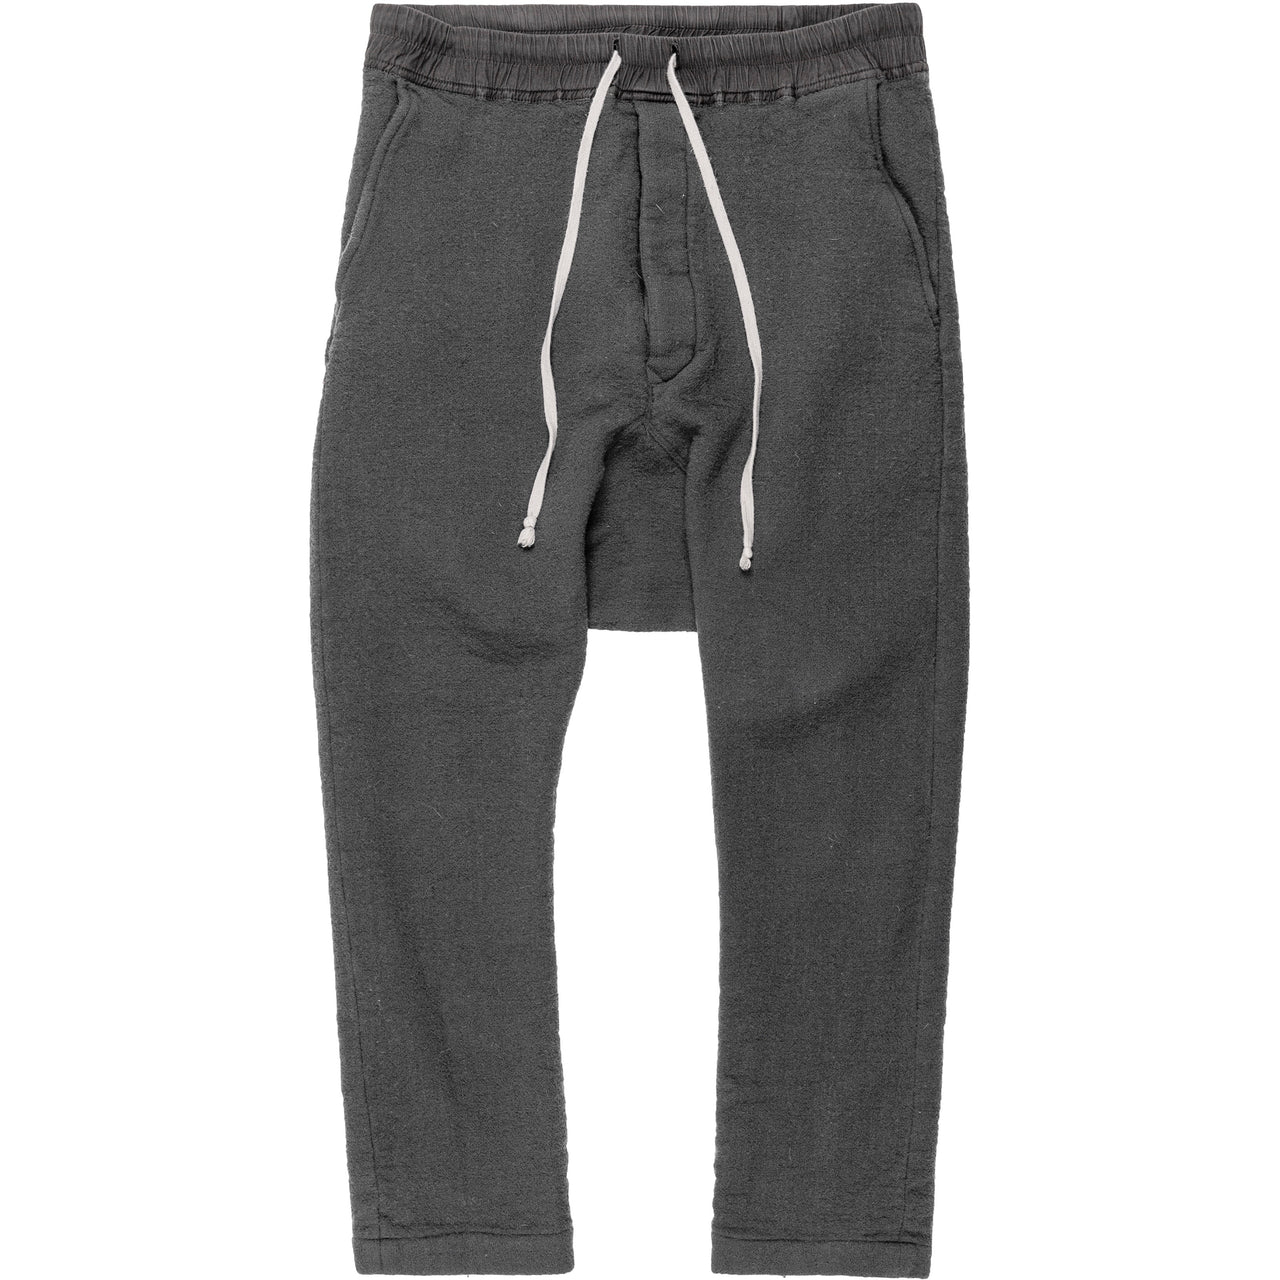 Rick Owens Wool Drop Crotch Pant - AW13 “Plinth”